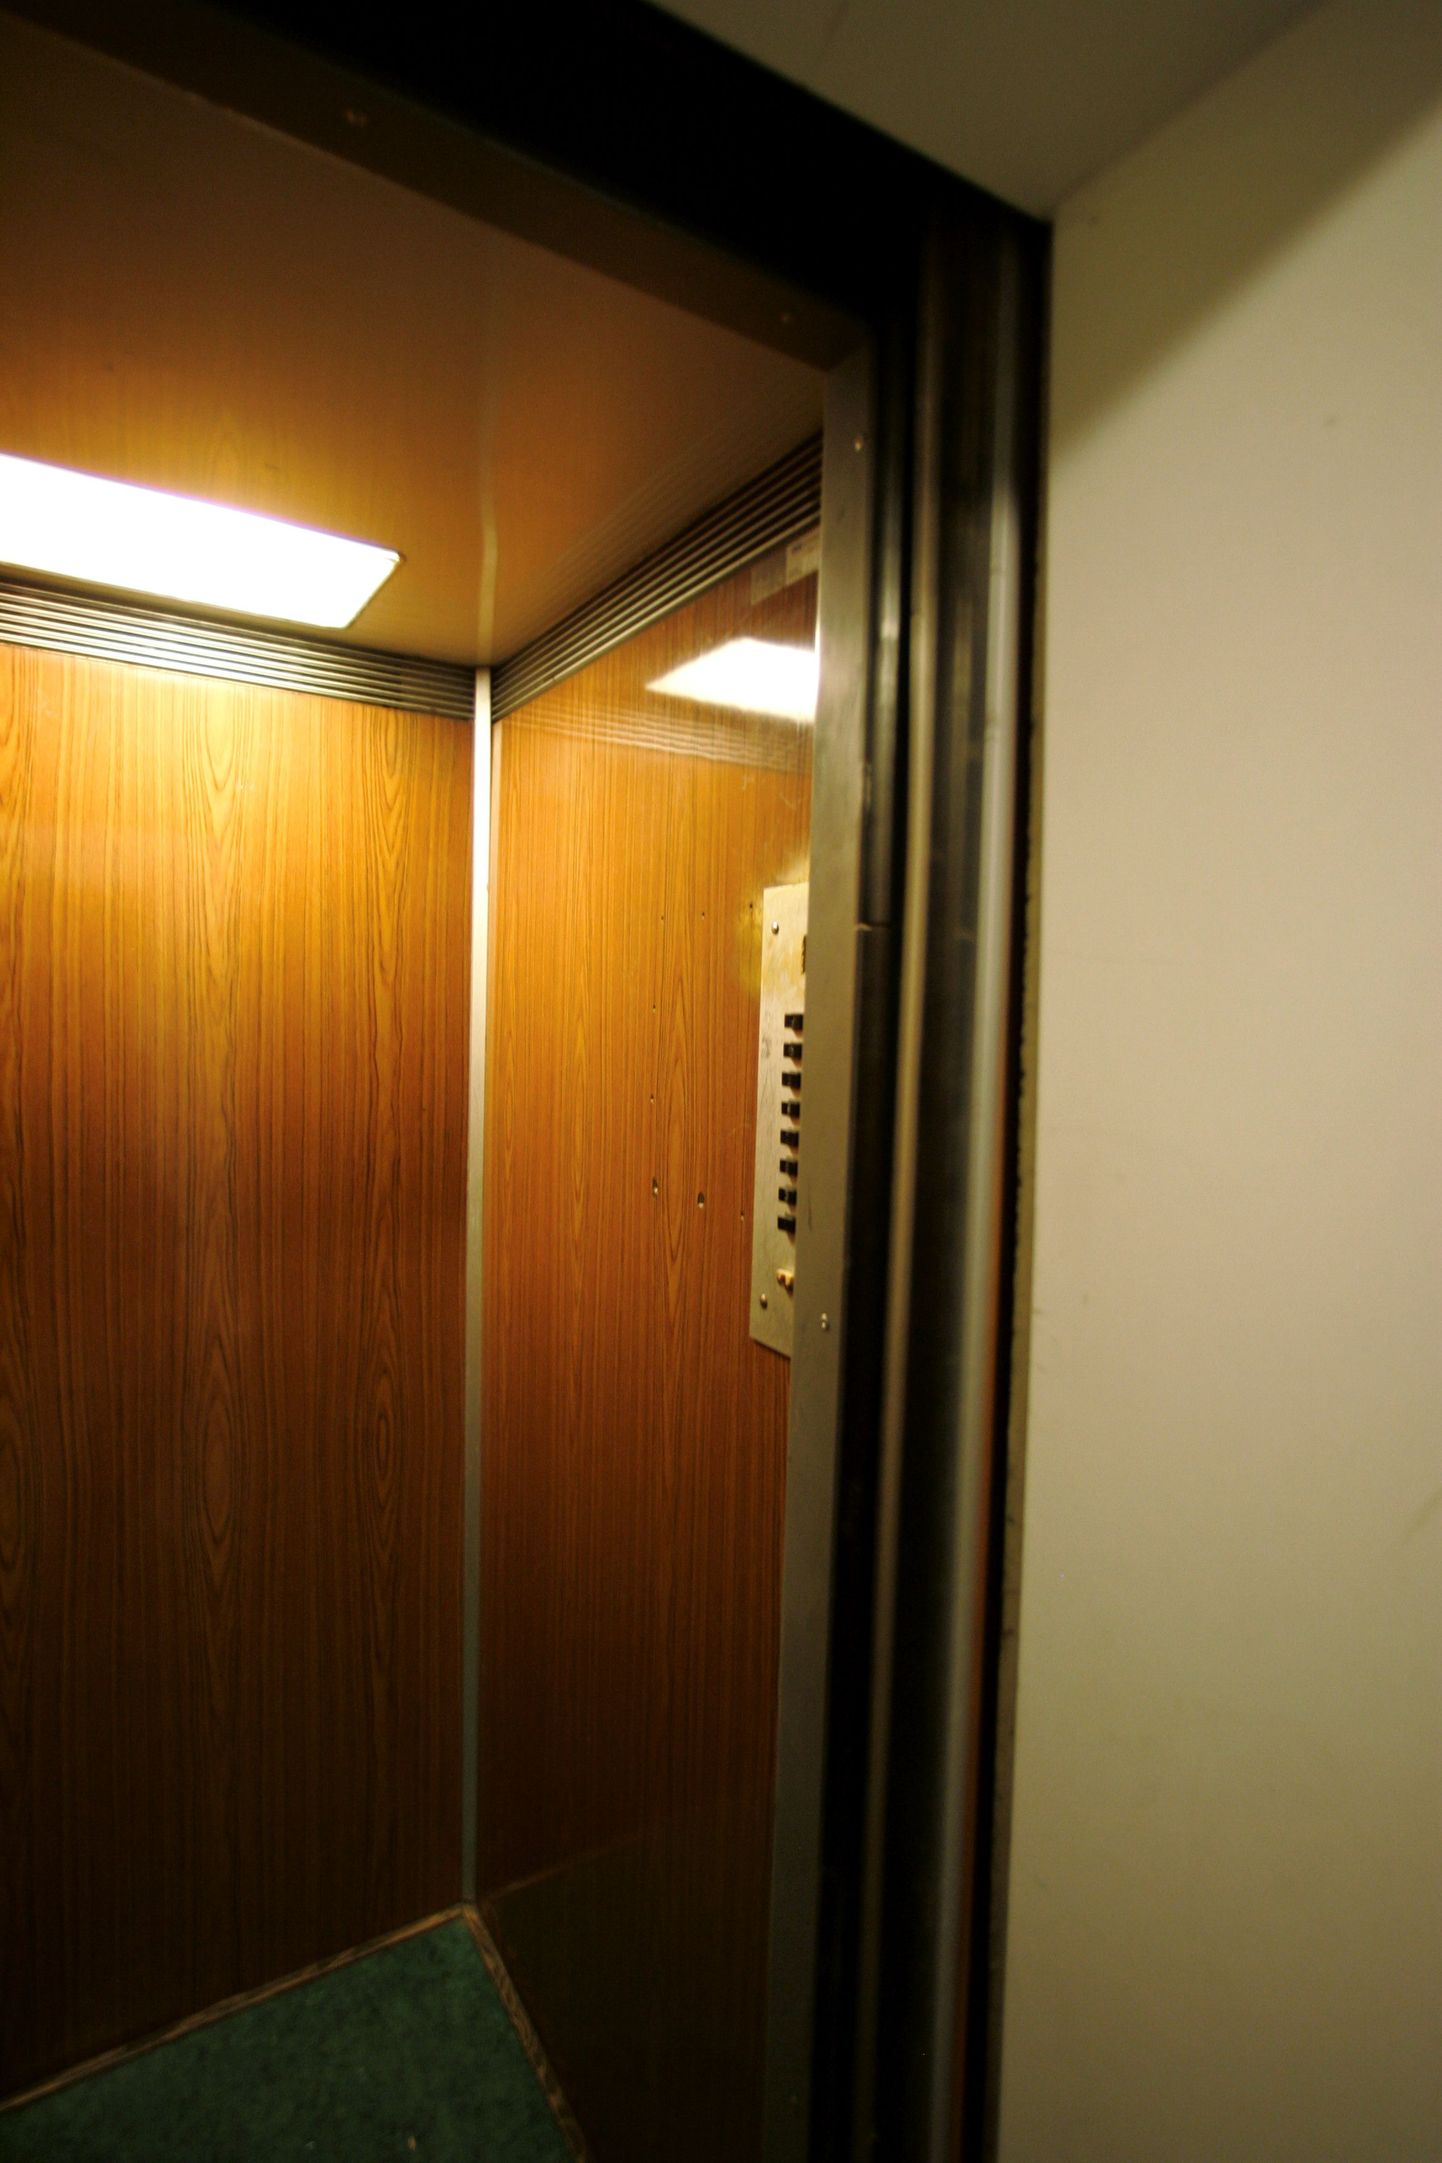 Лифт. Иллюстративное фото.